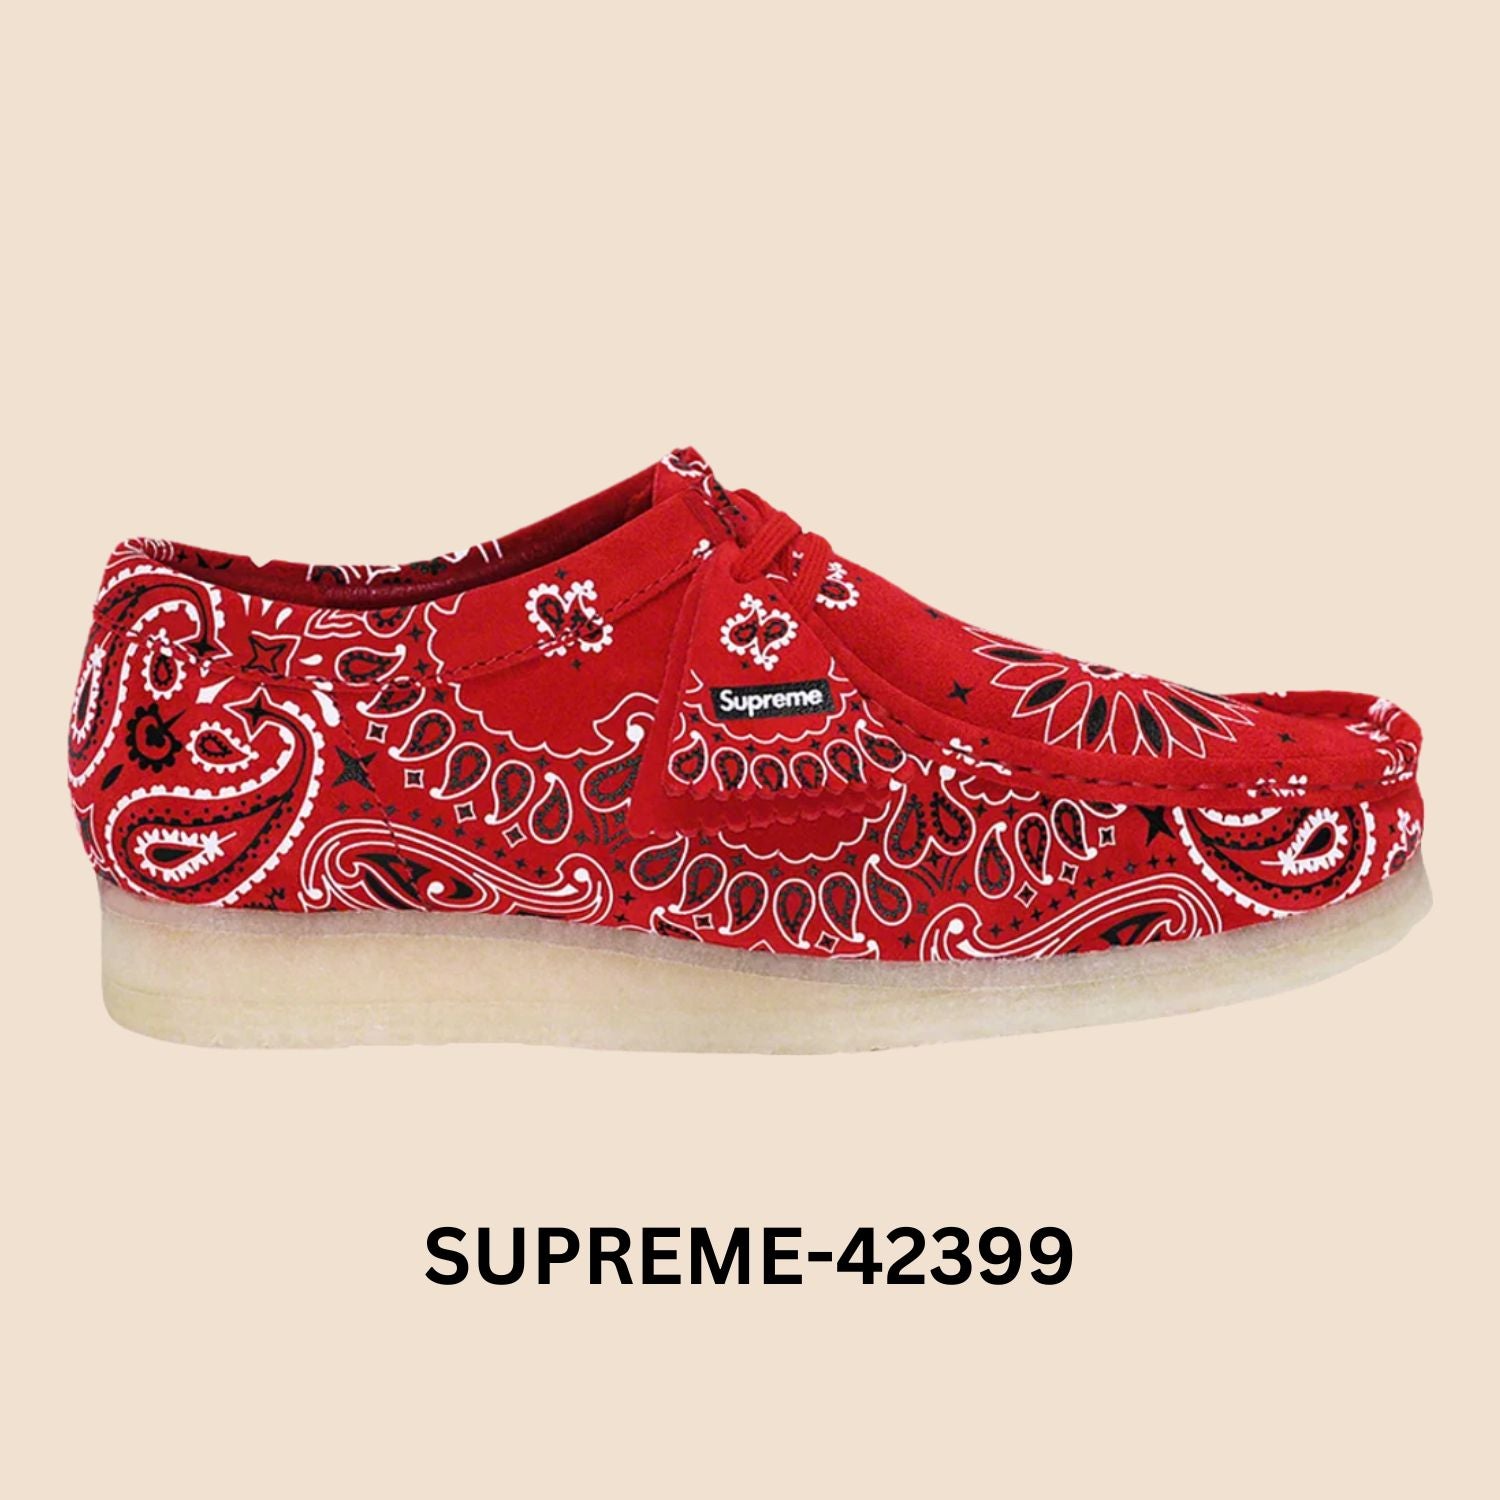 Supreme x Wallabee "Red Bandana" Men's Style# SUPR-42399